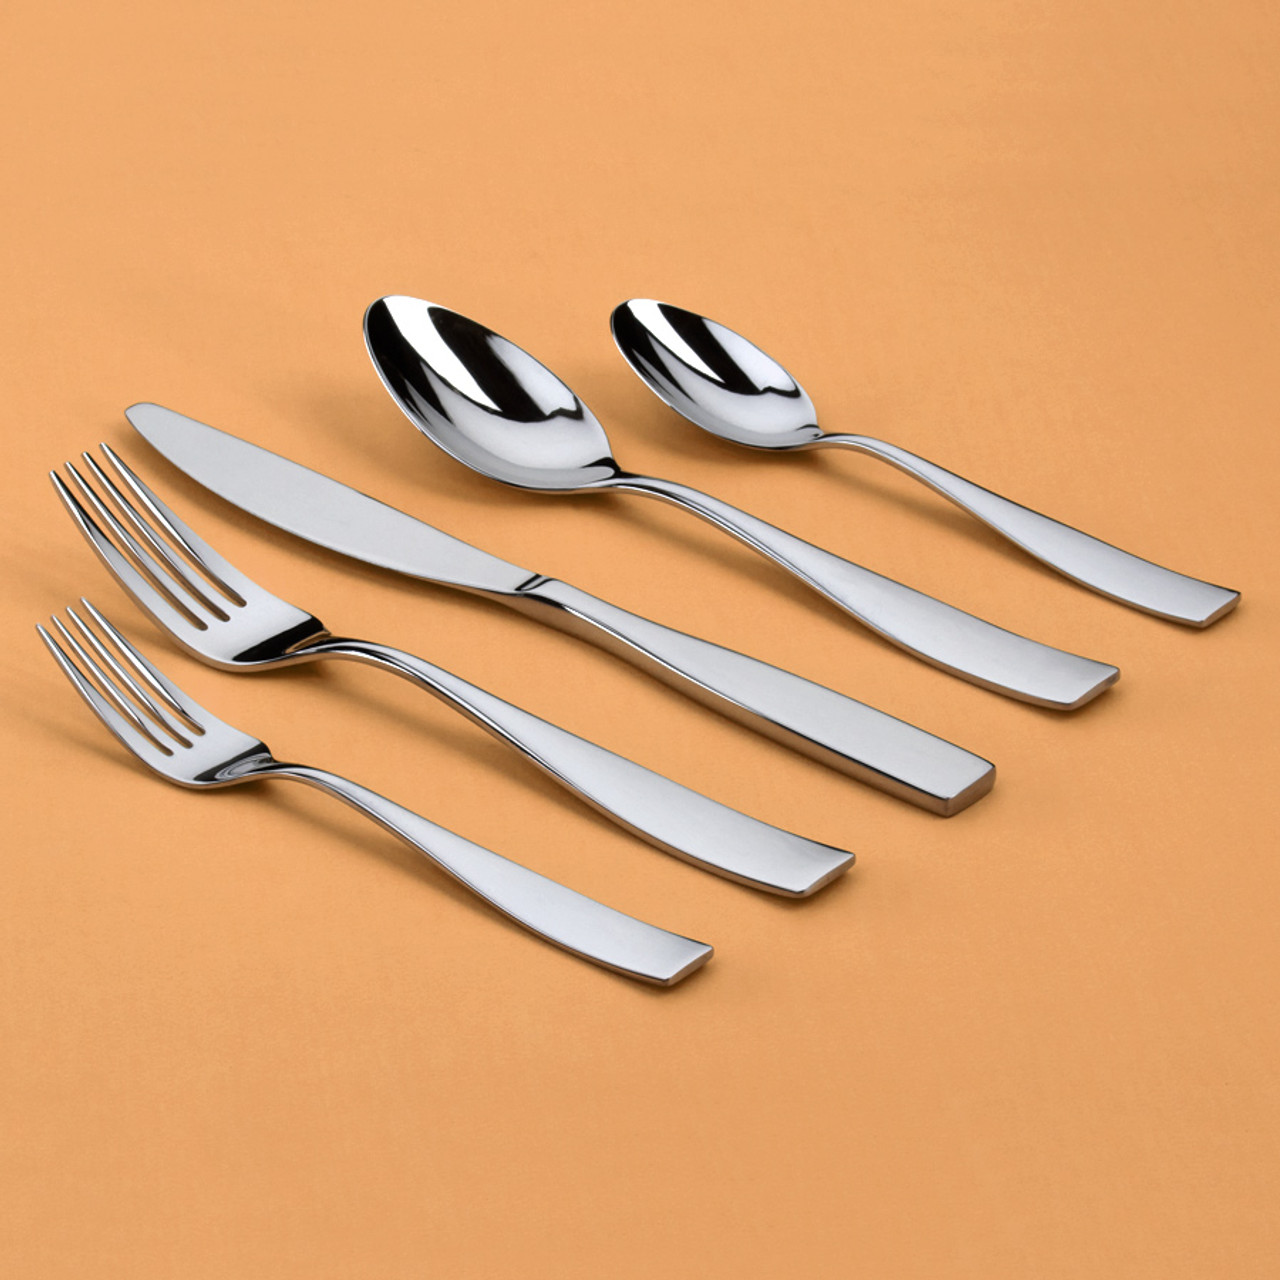 Silverware Set with Steak Knives 36-Piece Stainless Steel Flatware Set,  Kitchen Cutlery Set for 6, Include Steak Knife/Fork/Spoon, Dishwasher Safe